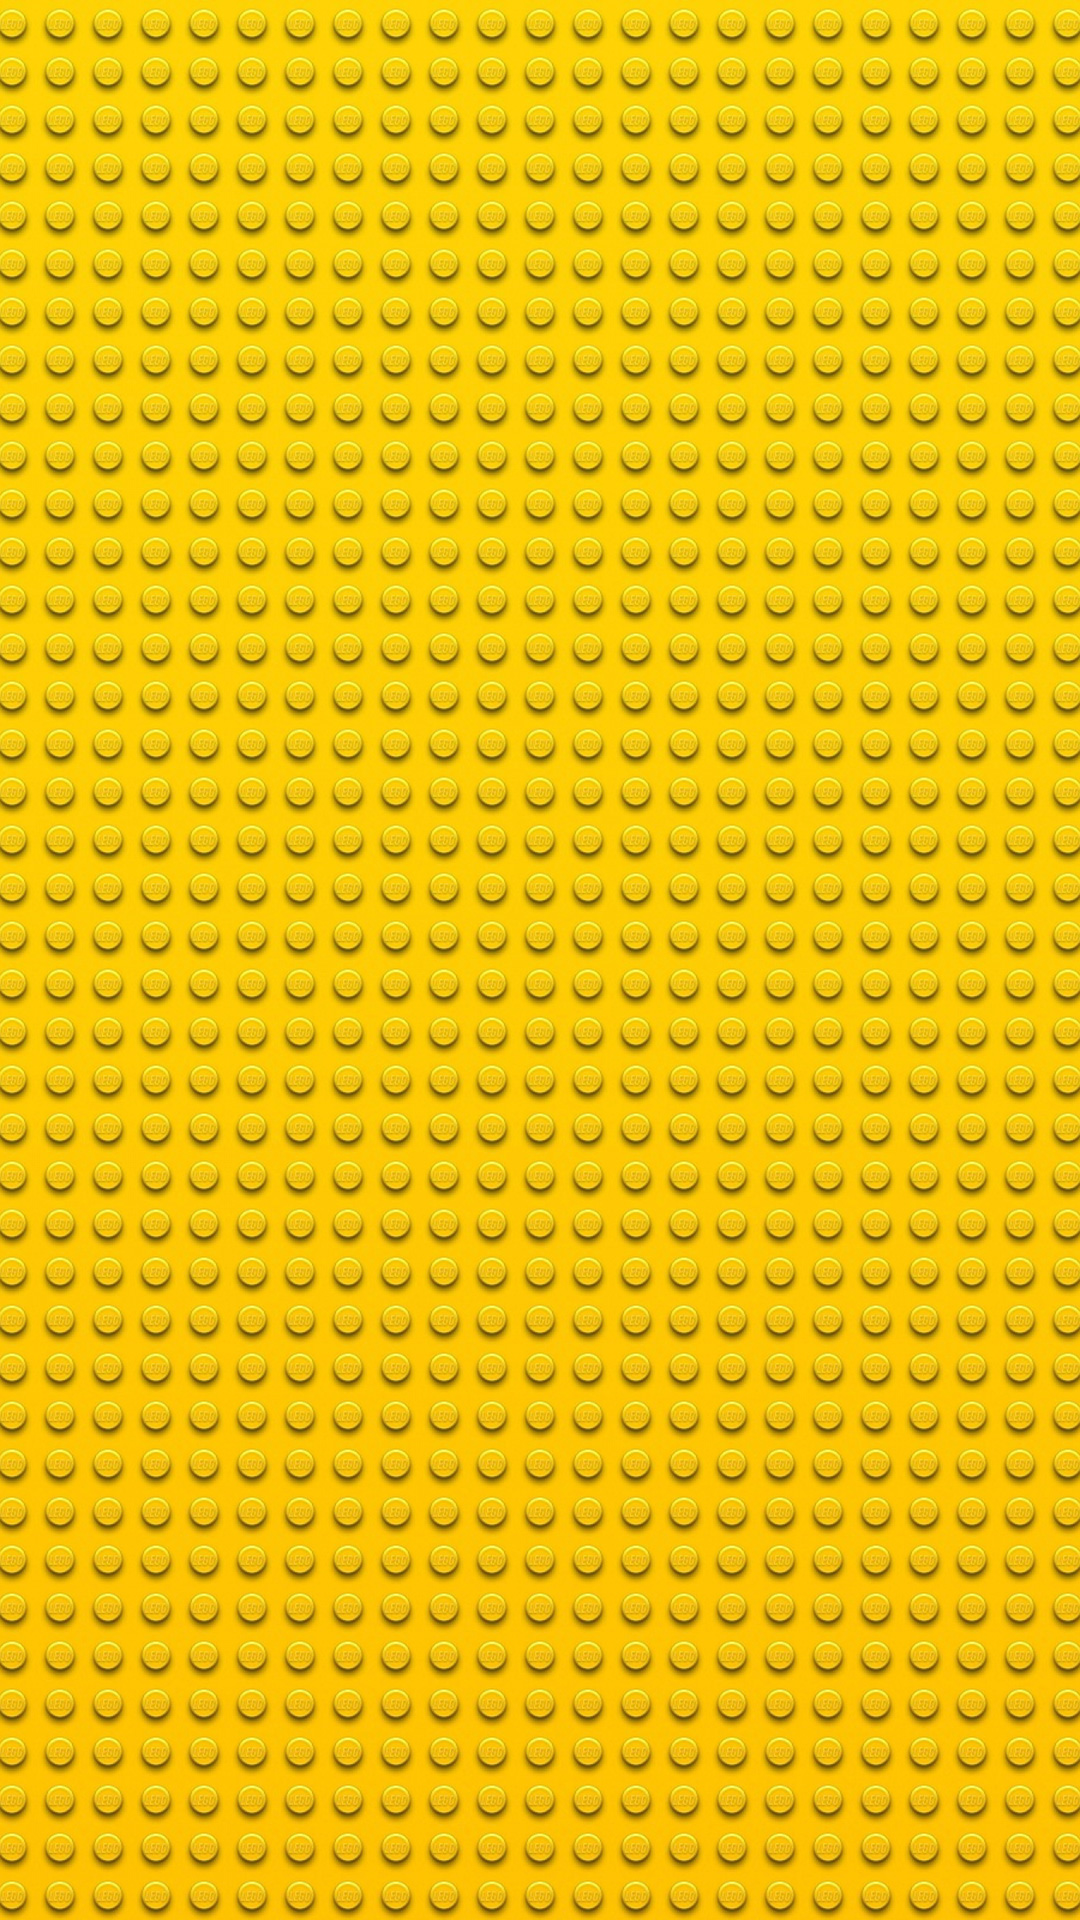 Lego Pattern iPhone Wallpaper.